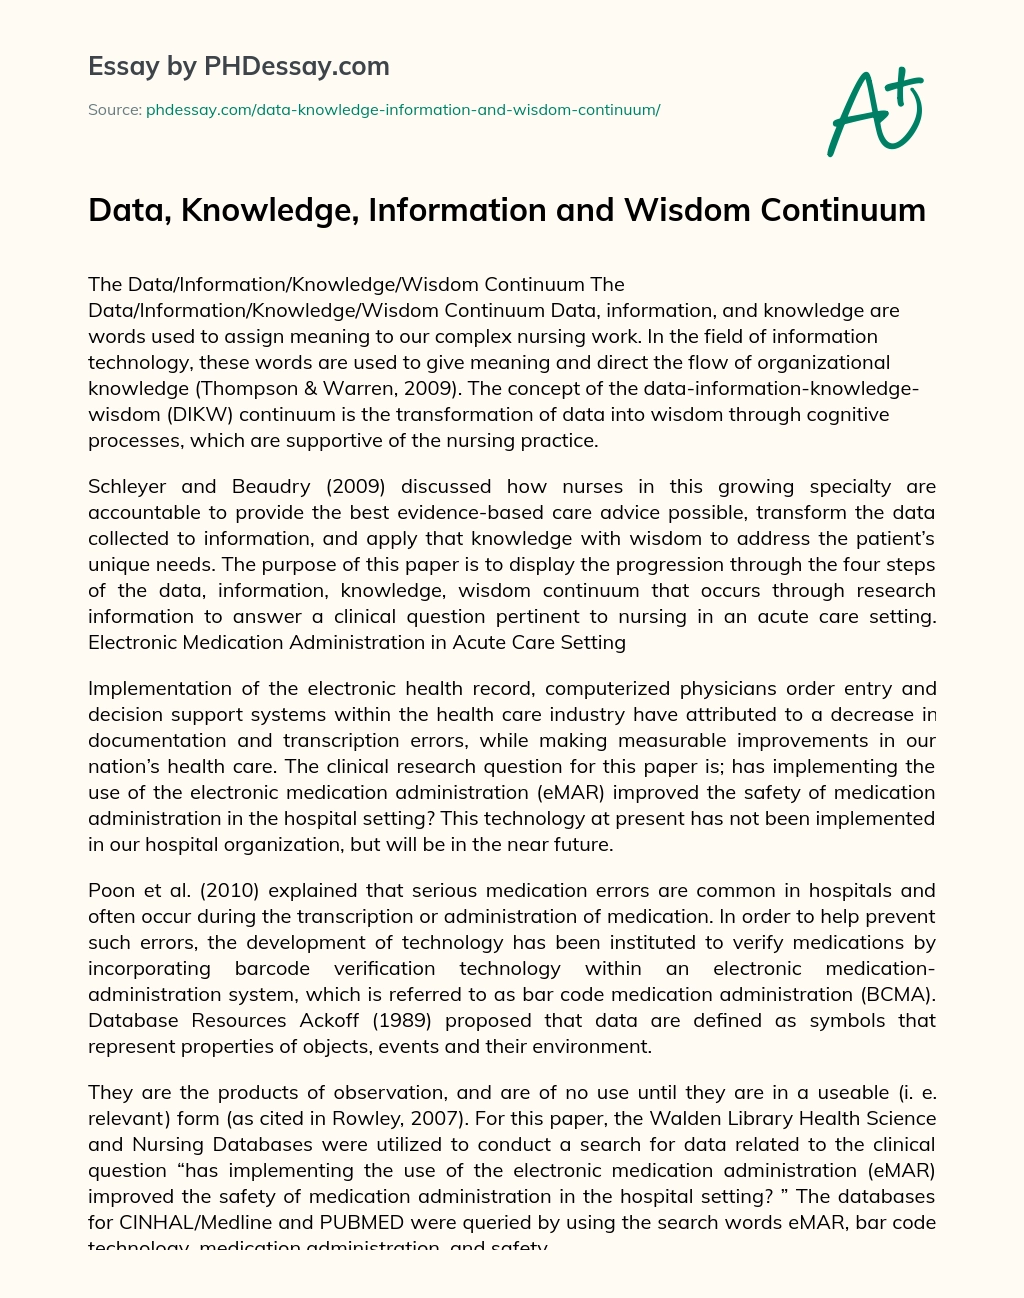 Data, Knowledge, Information and Wisdom Continuum essay